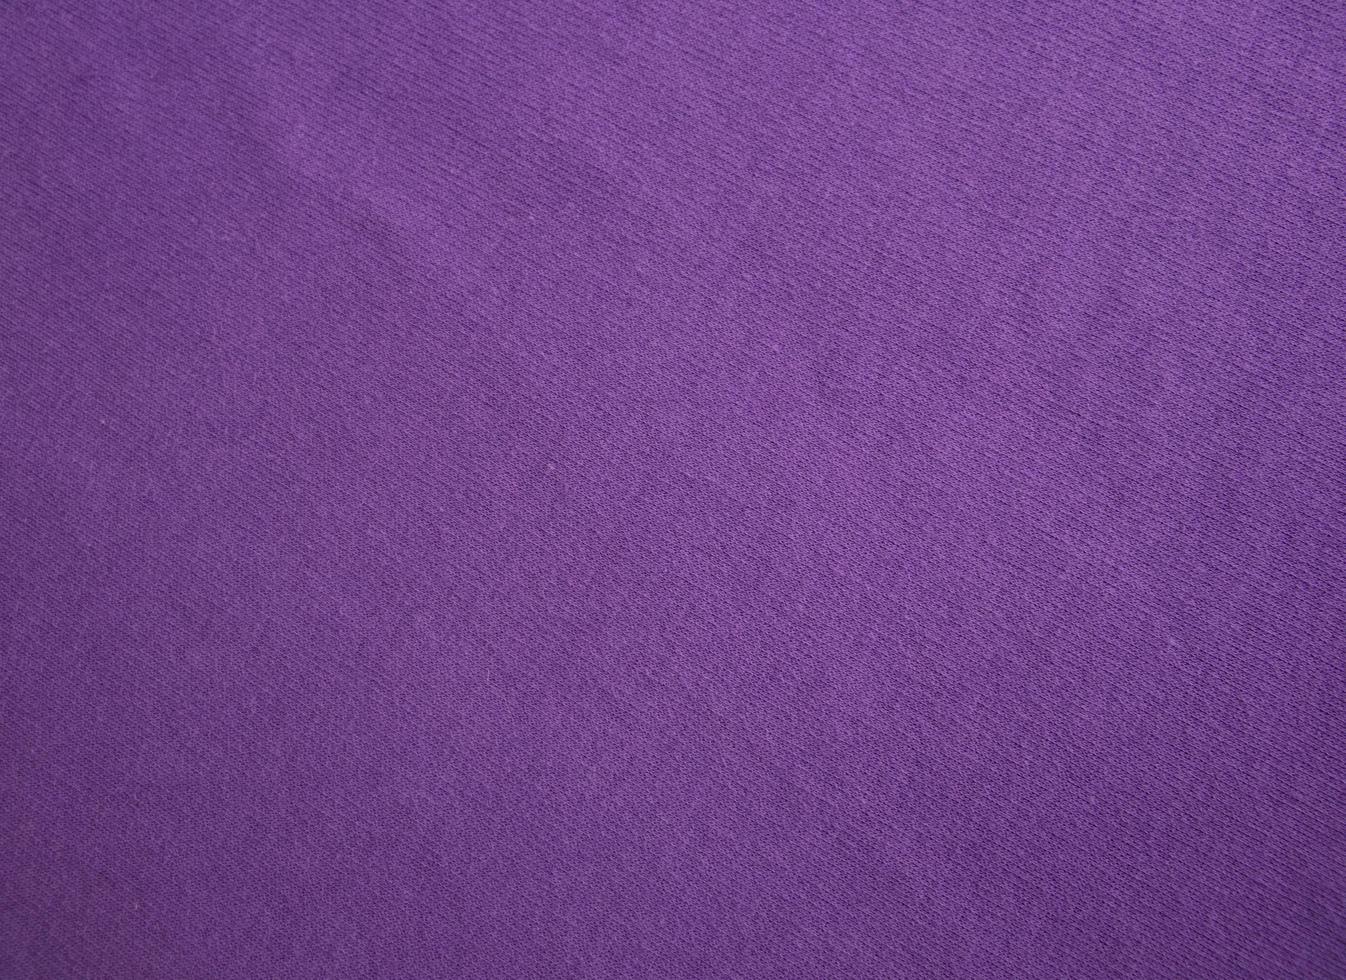 purple fabric texture cloth background photo